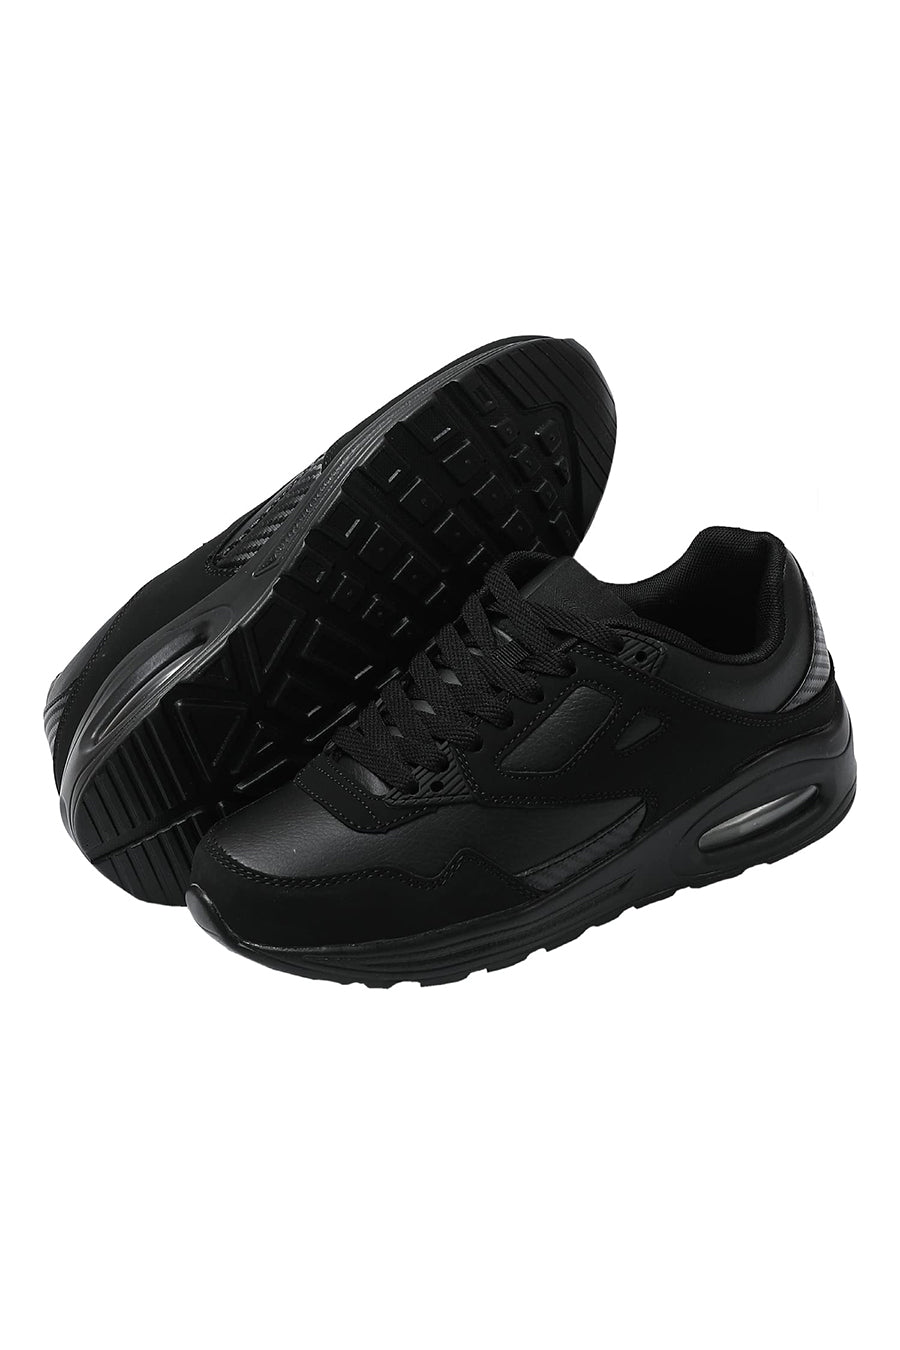 JOMIX Scarpe da Ginnastica Donna Sneakers Casual Sportive Ammortizzate Comode ND138